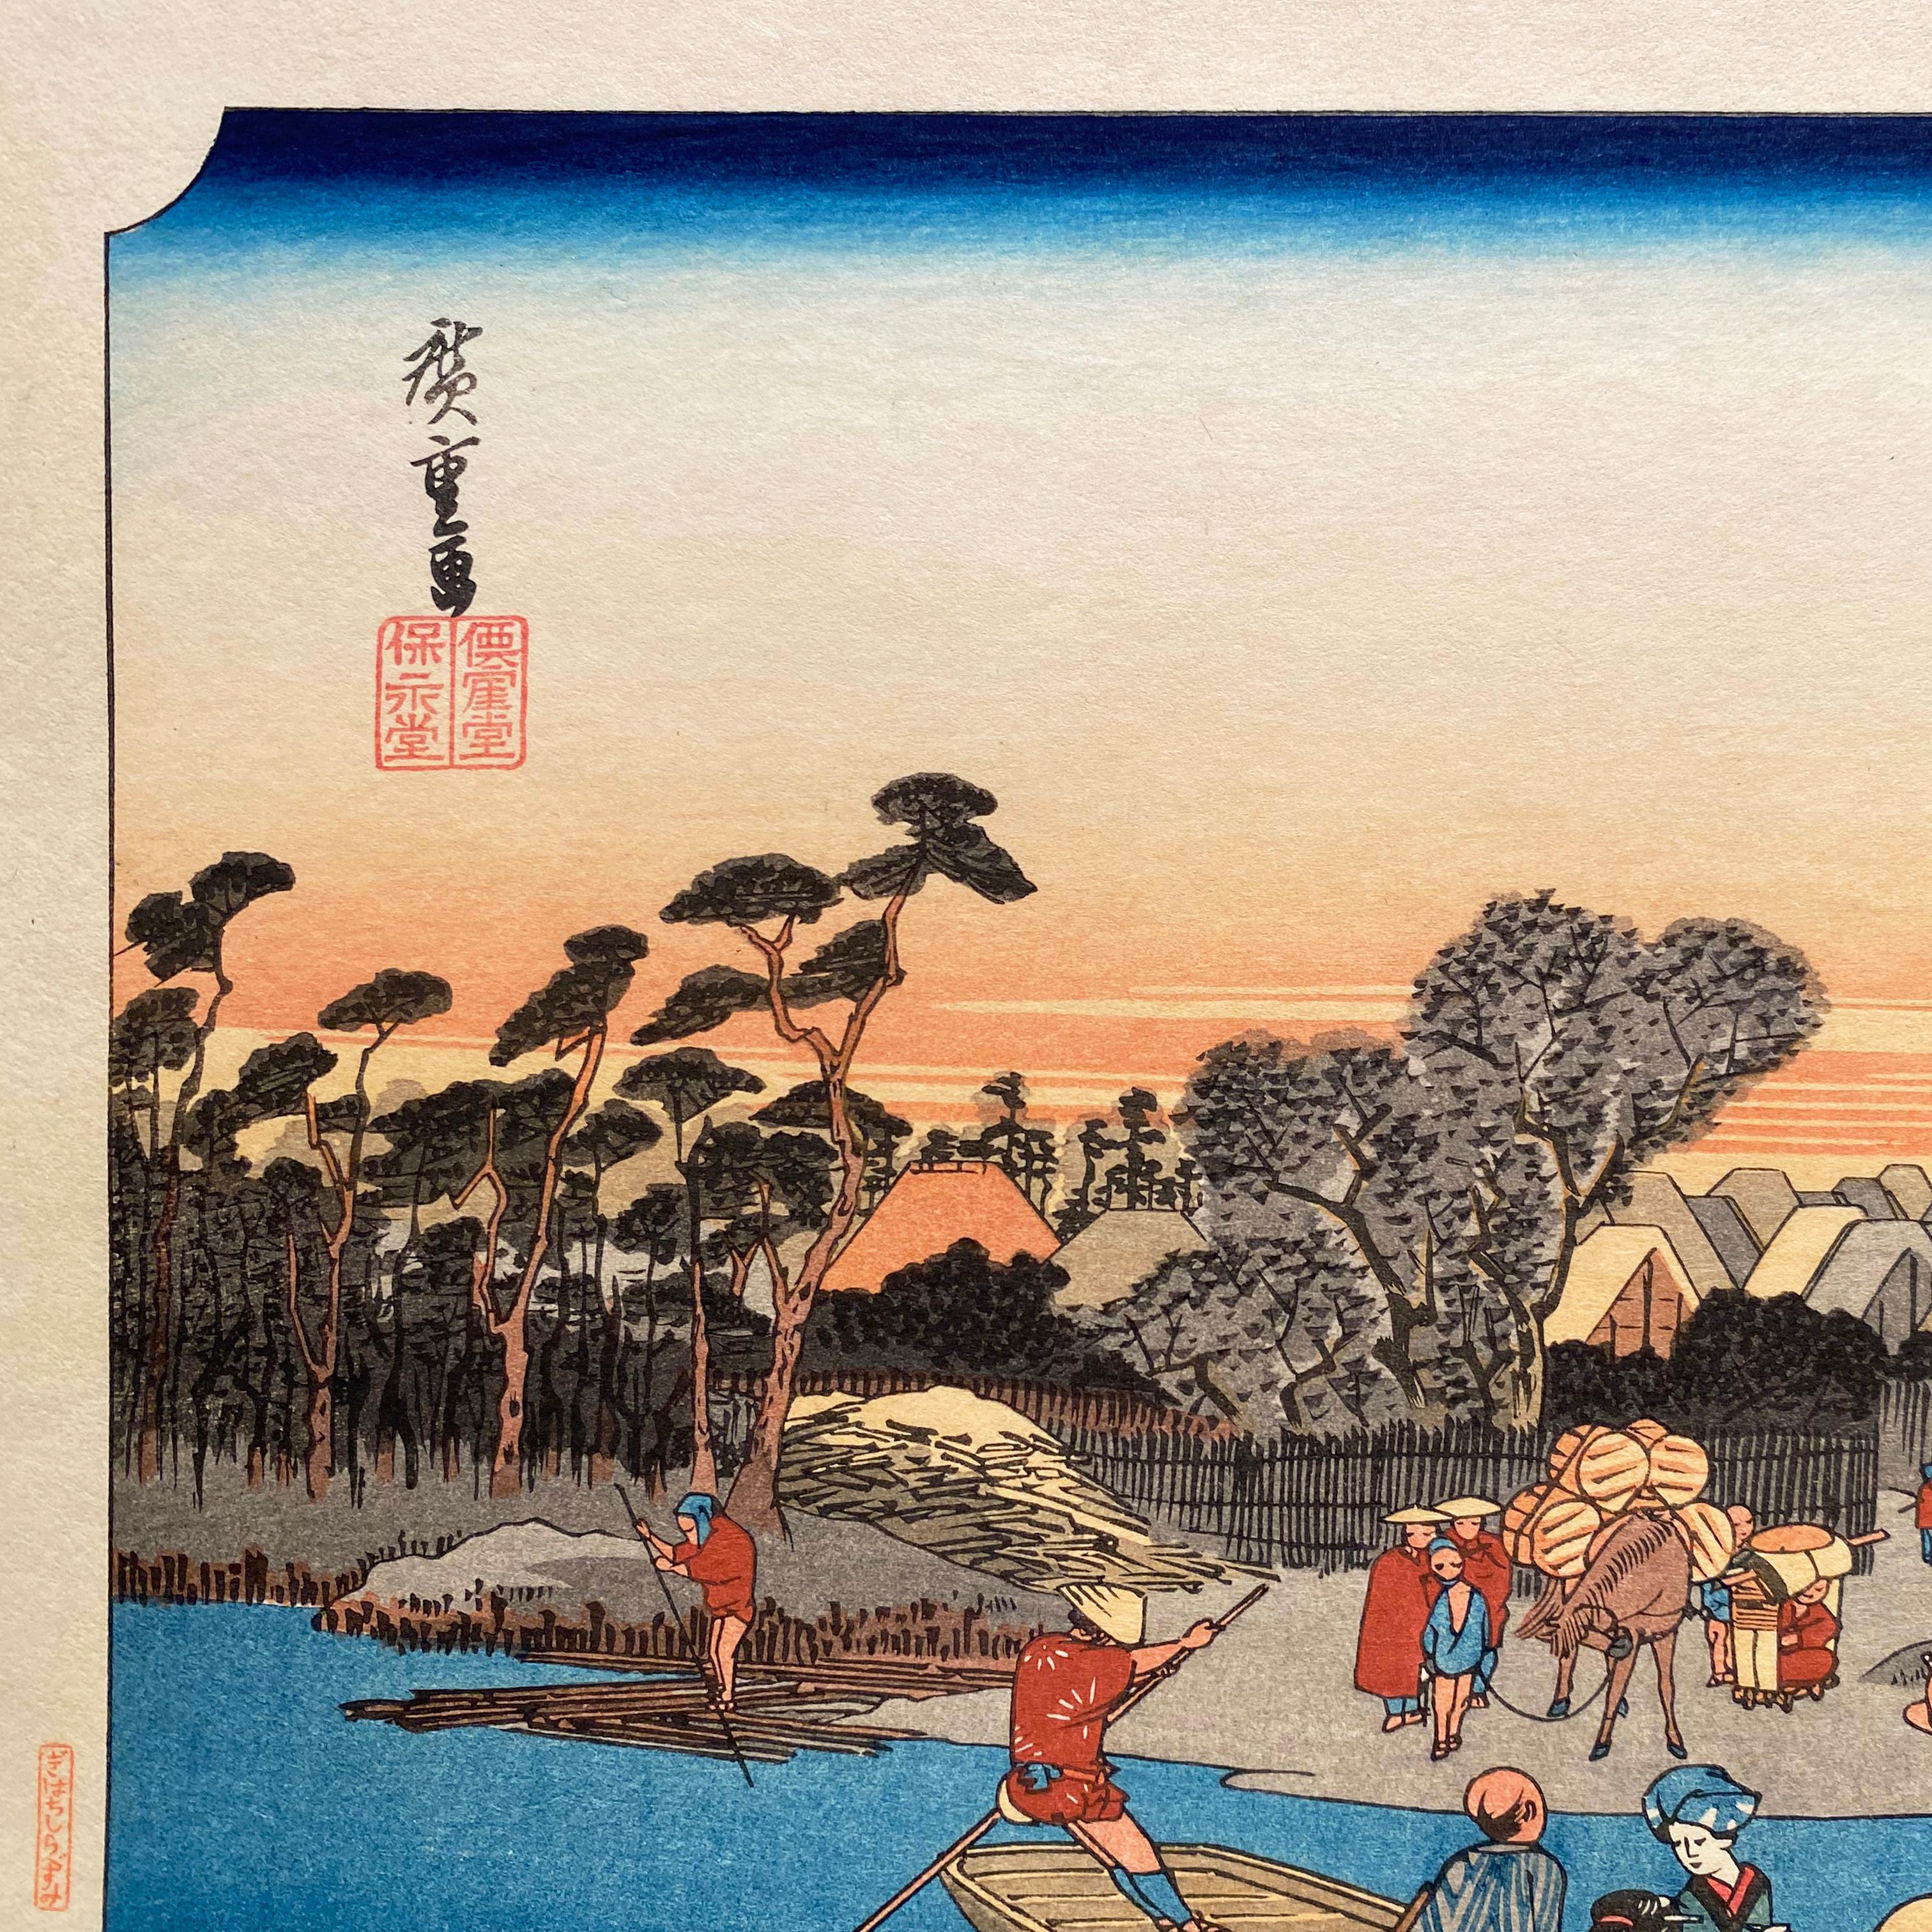 'A View of Kawasaki', After Utagawa Hiroshige 歌川廣重, Ukiyo-e Woodblock, Tokaido - Print by Utagawa Hiroshige (Ando Hiroshige)